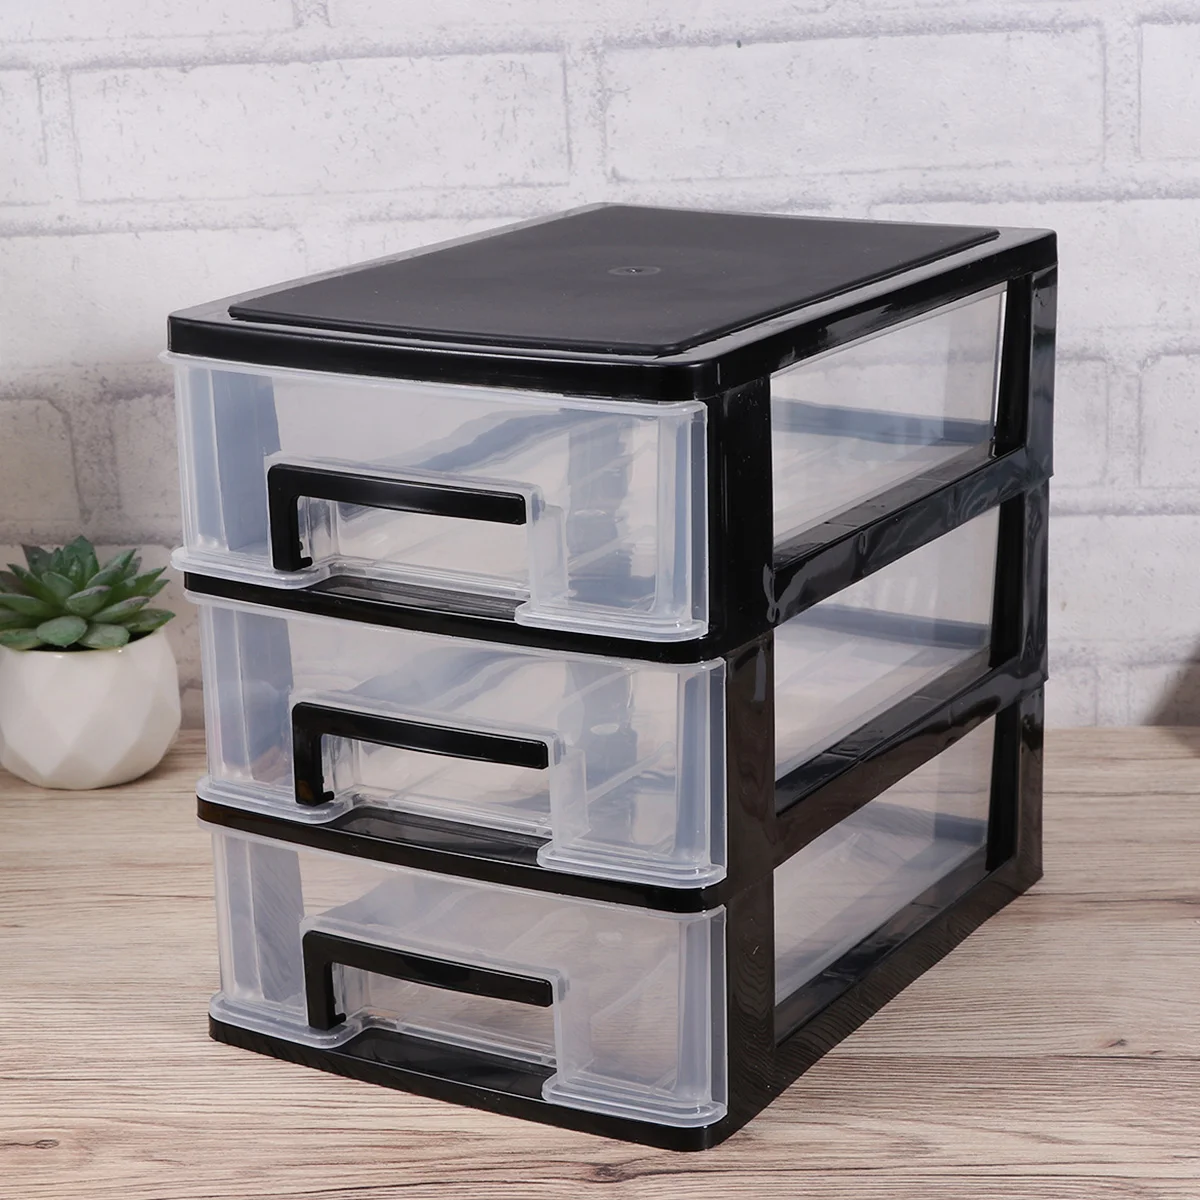 

Storage Drawer Drawers Organizer Desktop Cabinet Box Layer Closet Type Desk Multi Shelf Furniture Office Stackable Unit Bins